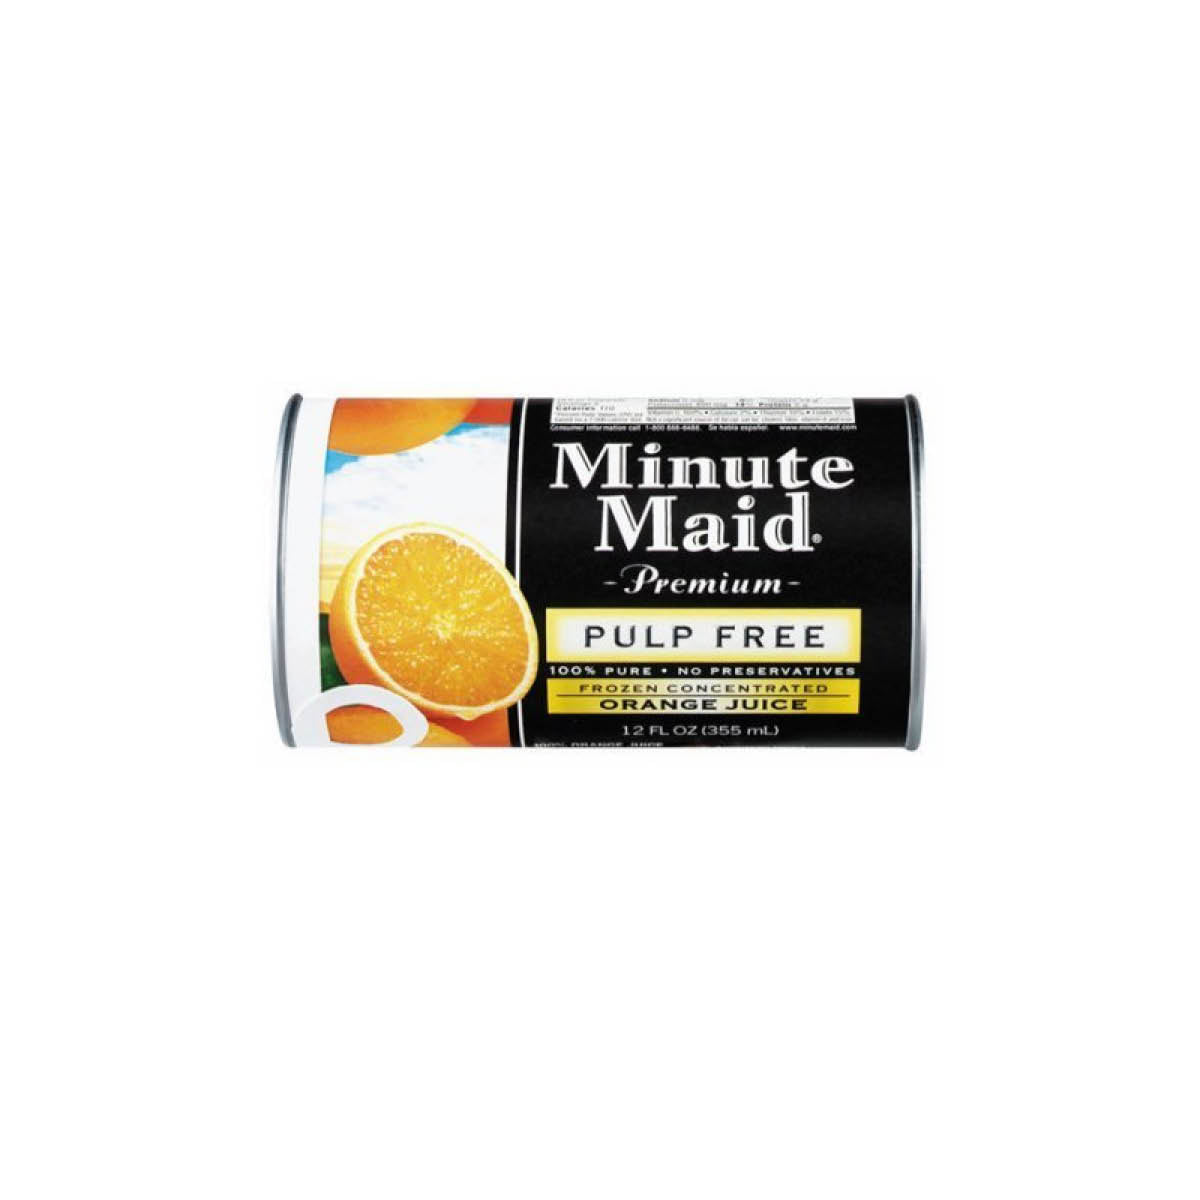 Minute Maid Frozen Orange Juice - Pulp Free